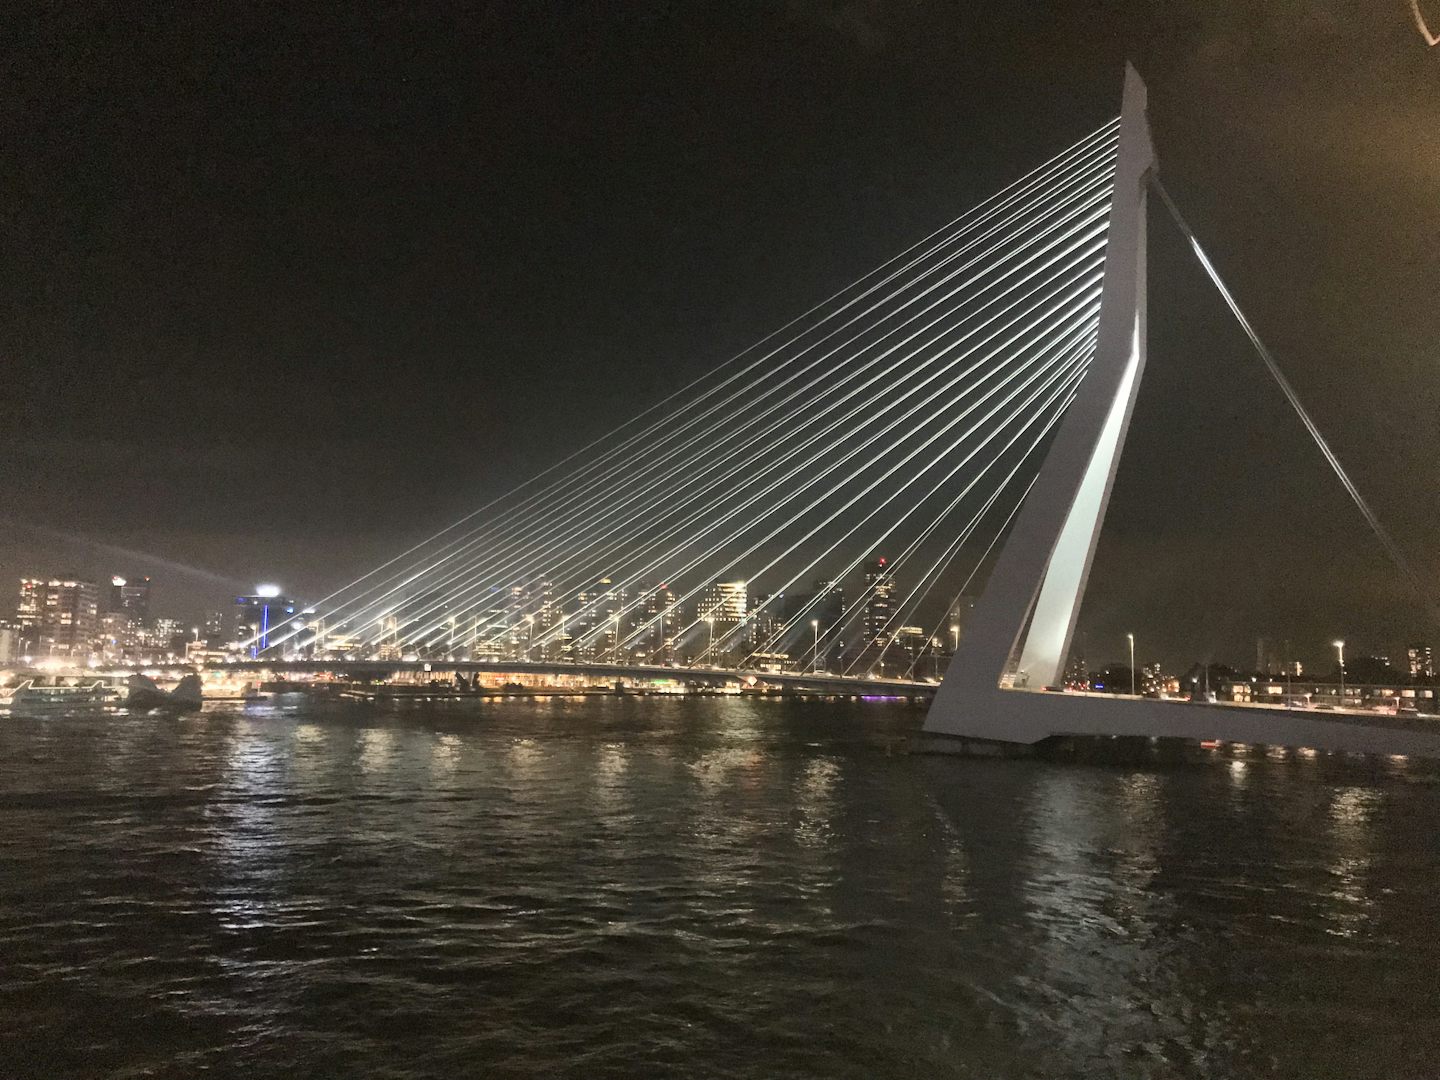 The Erasmus bridge by the Rotterdam port